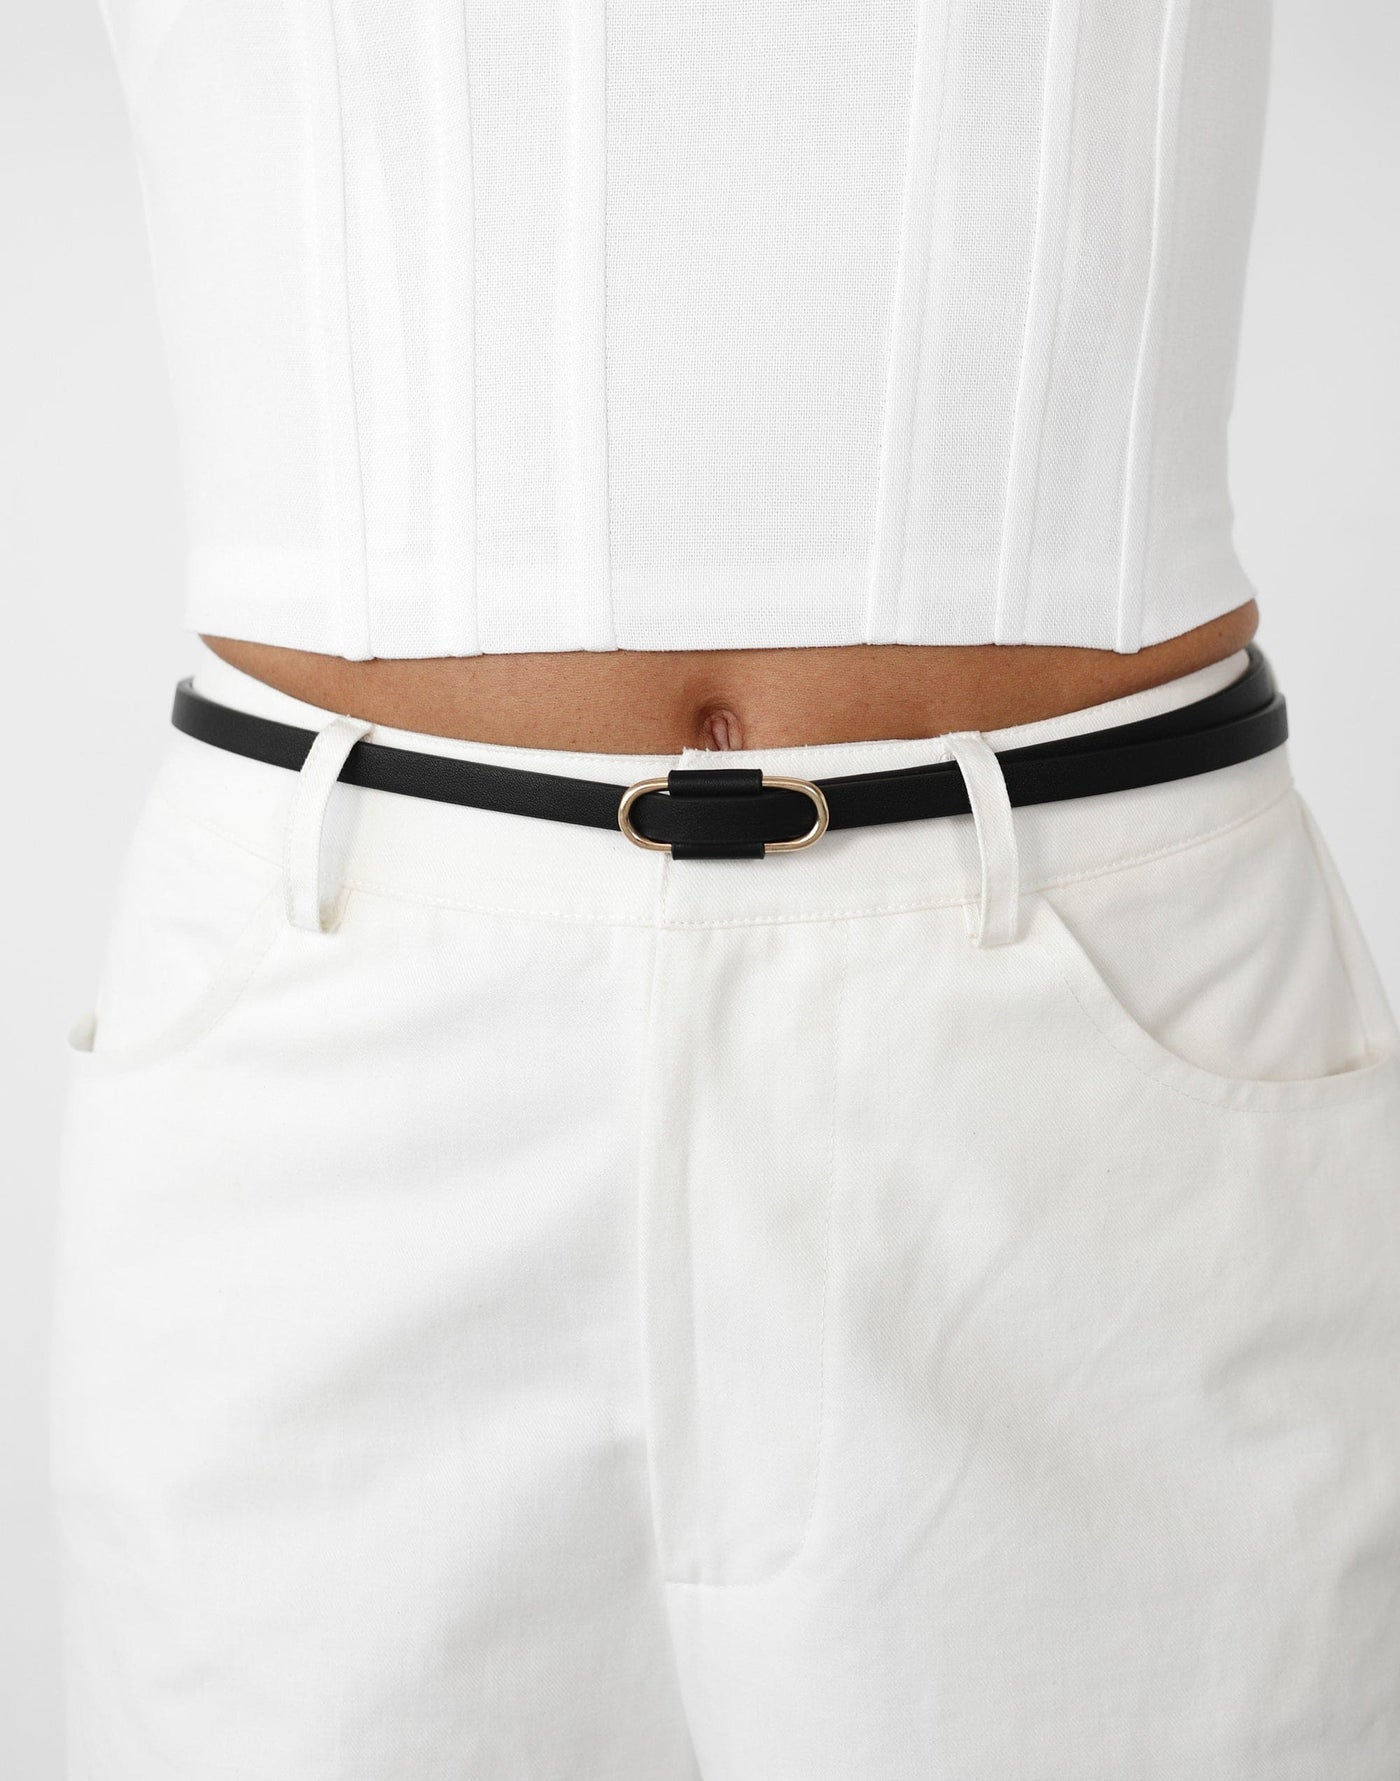 Blair Belt (Black) - Thin Black Faux Leather Belt - Women's Accessories - Charcoal Clothing